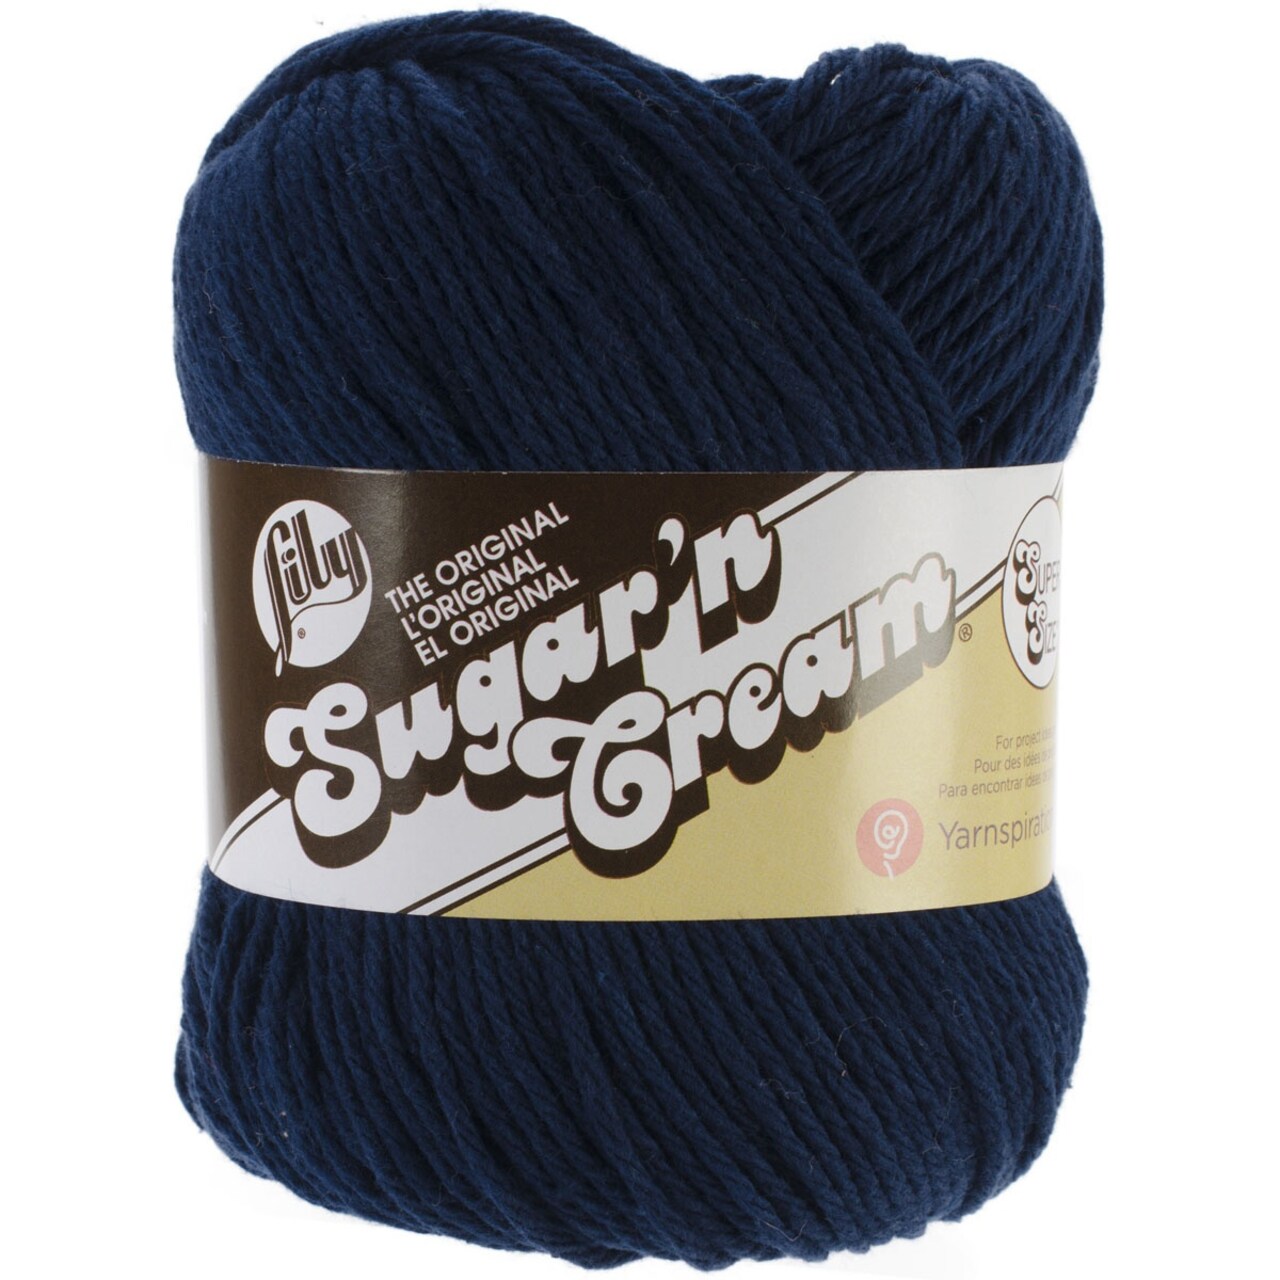 Lily Sugar'N Cream Super Size Bright Navy Yarn - 6 Pack of 113g